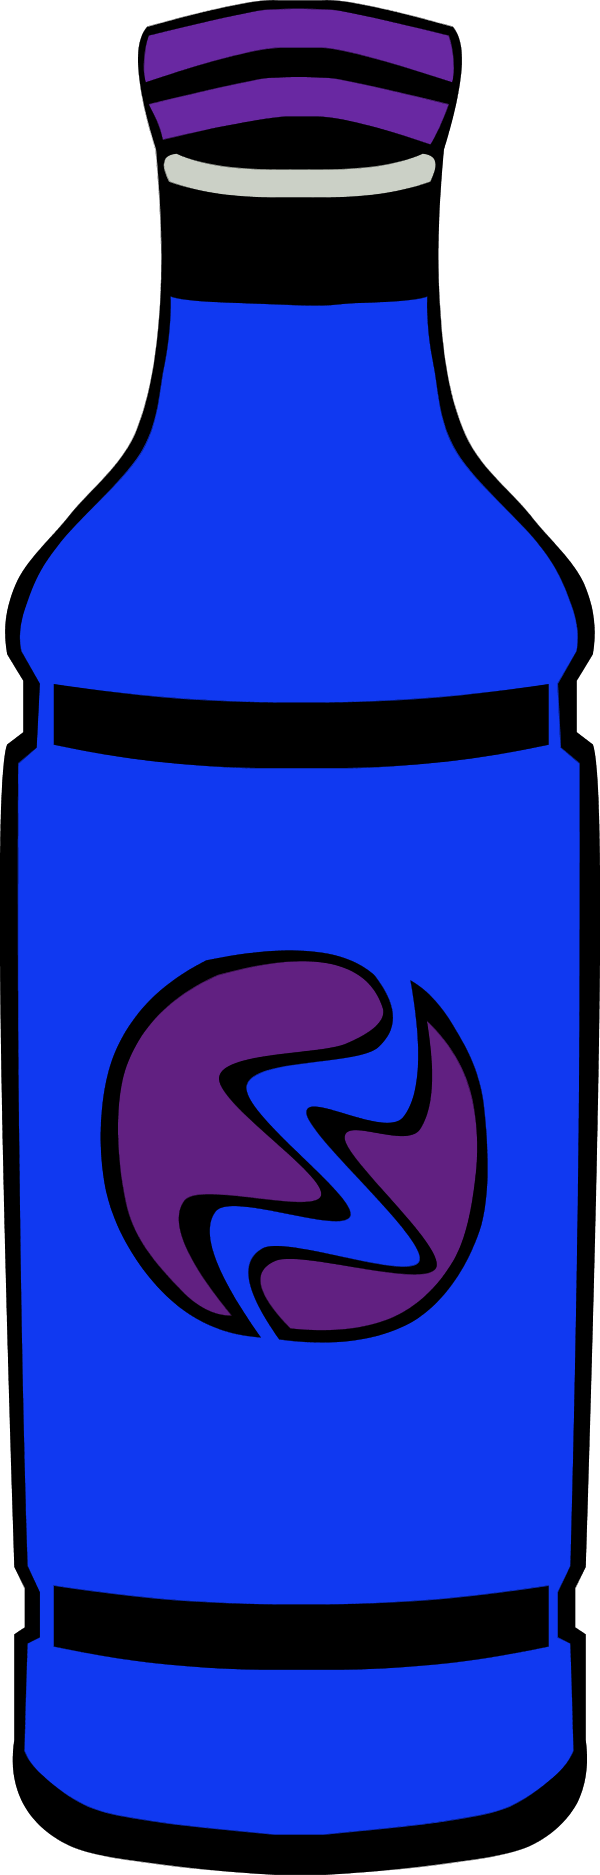 Orange Juice Bottle Vector Clip Art - Blue Bottle Clip Art (600x1875)